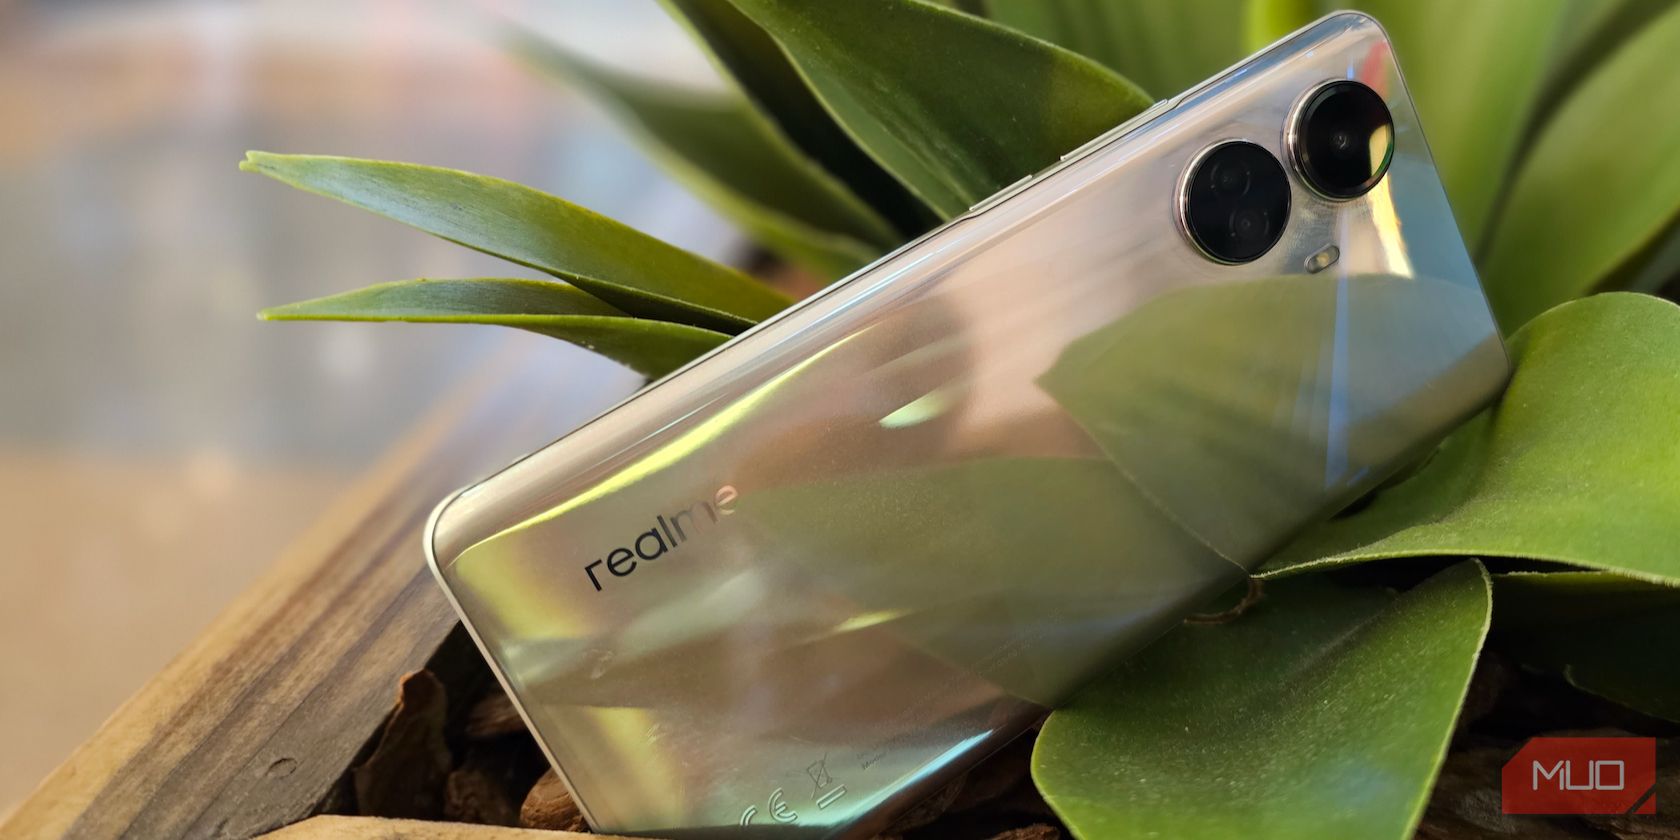 Realme 10 Pro 5G Smartphone: Impressive 108MP Camera and Powerful